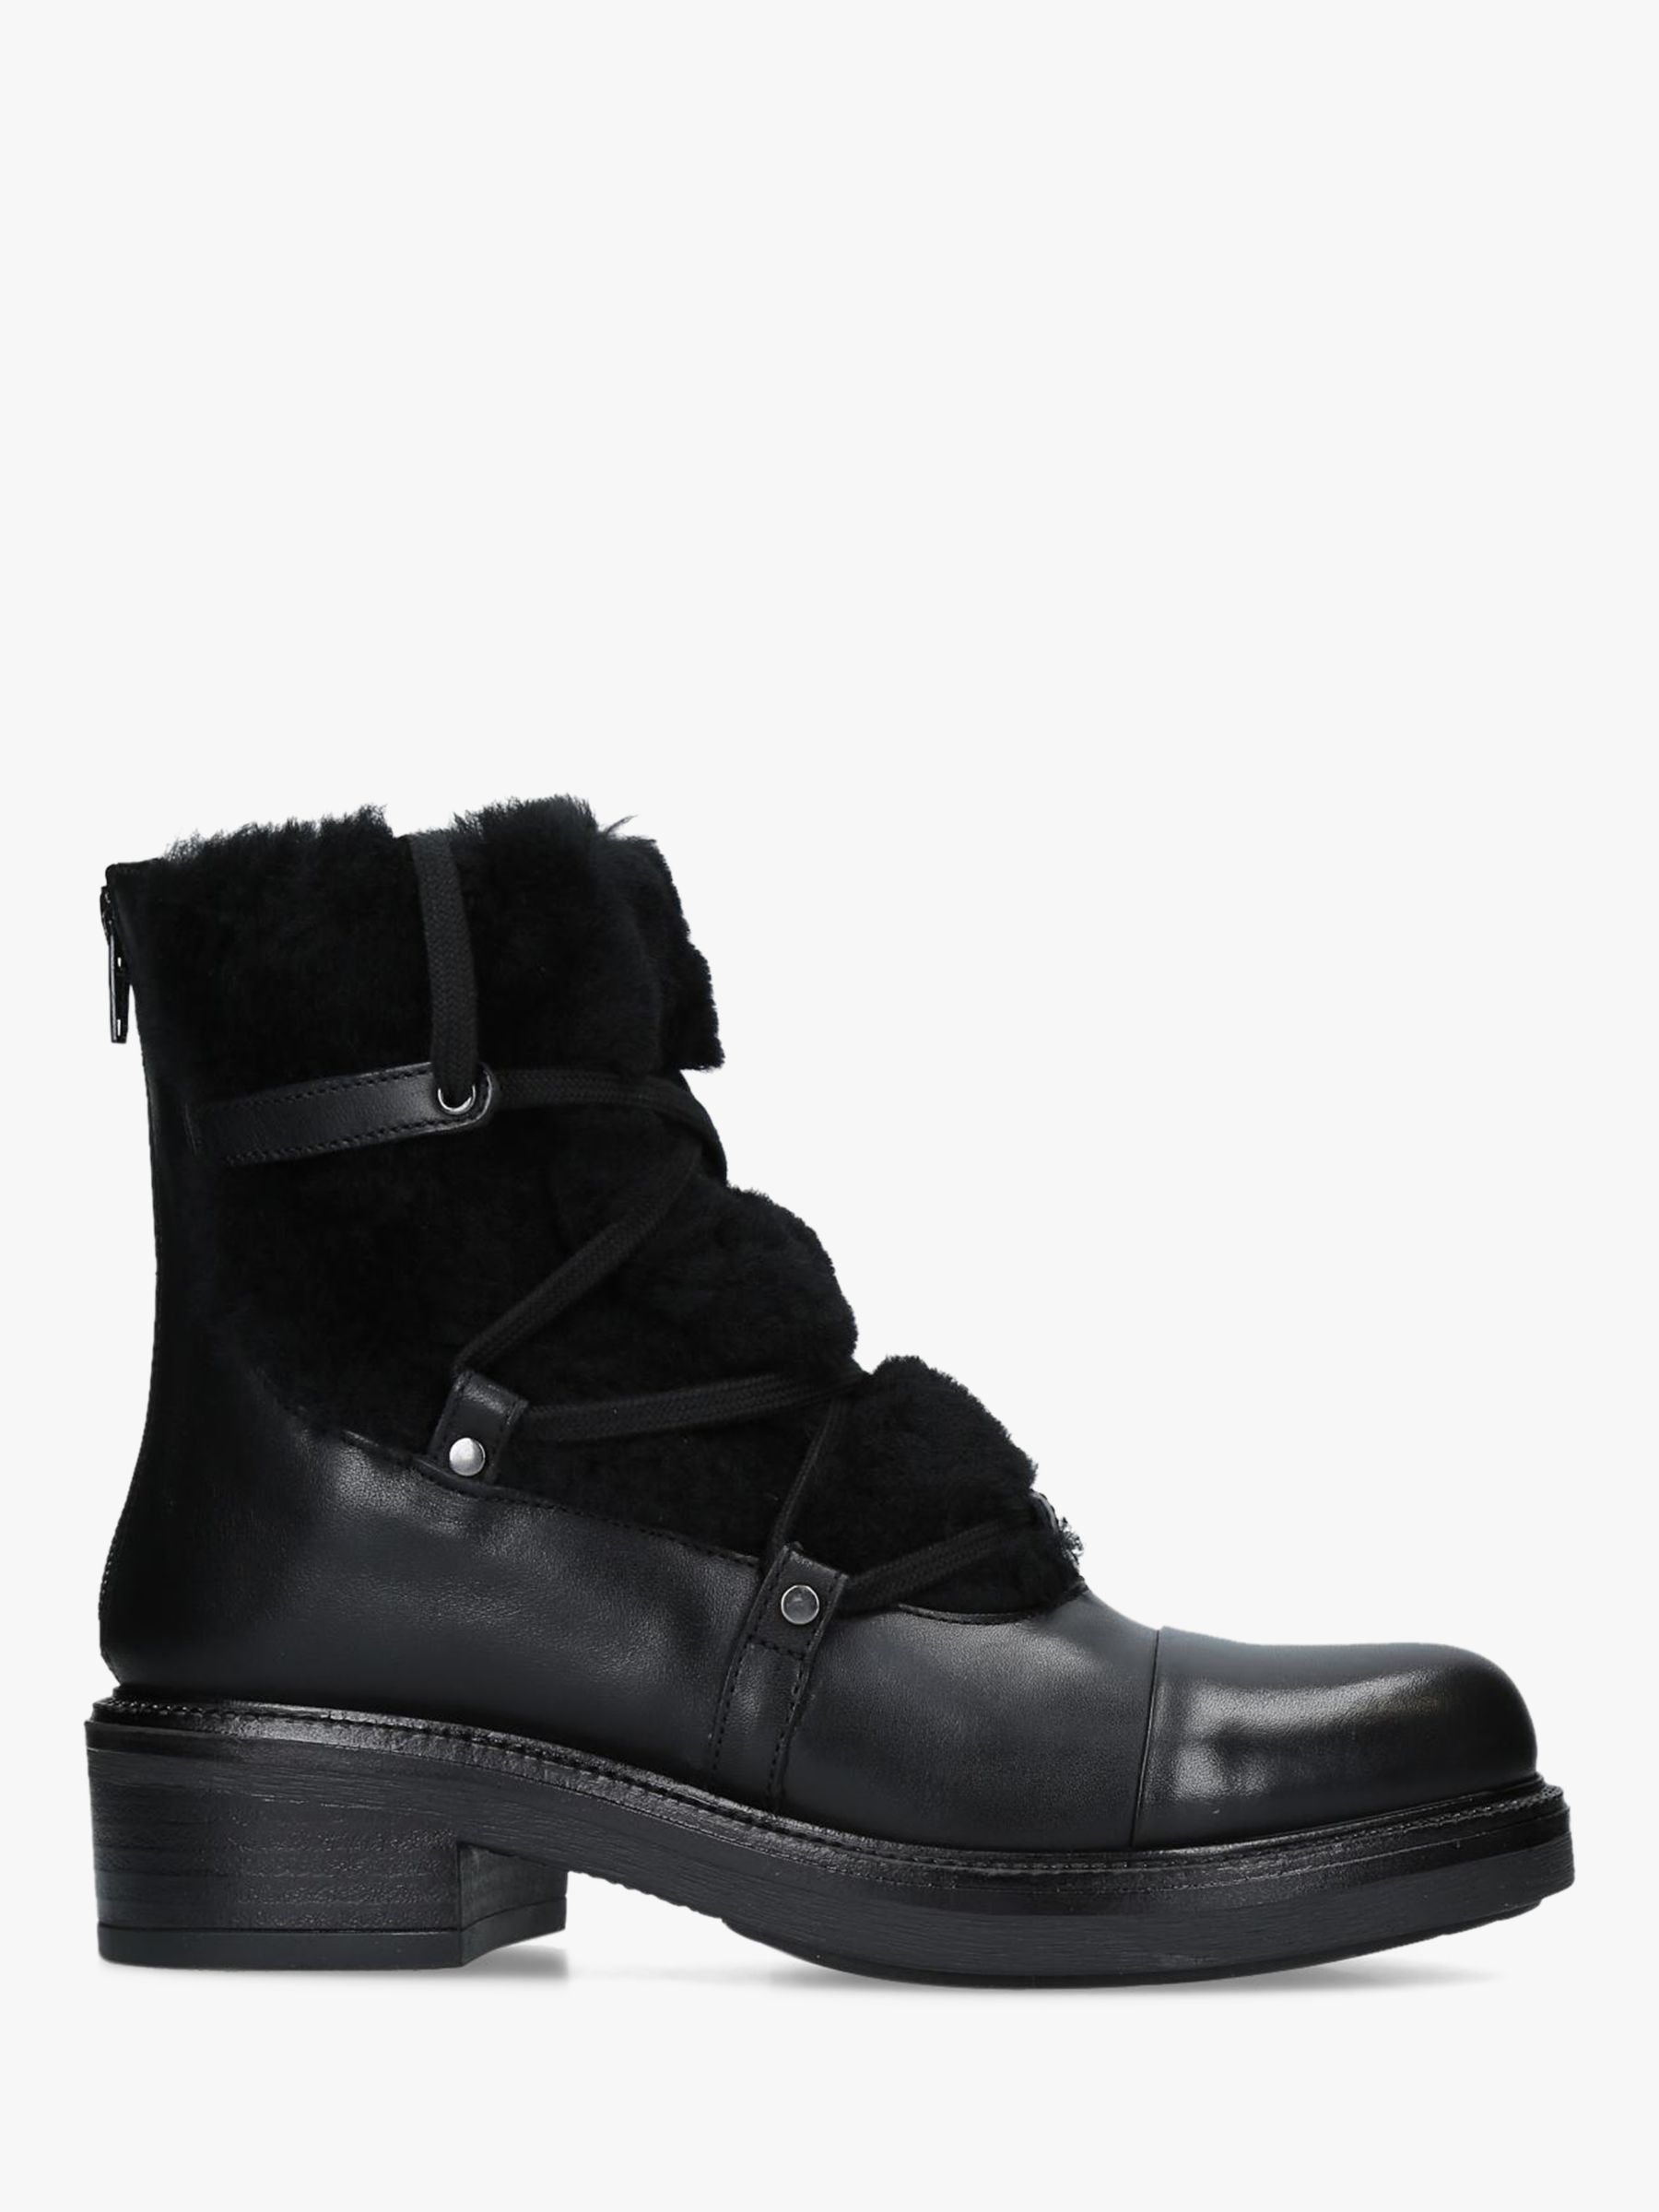 Carvela Sharp Ankle Boots, Black Leather